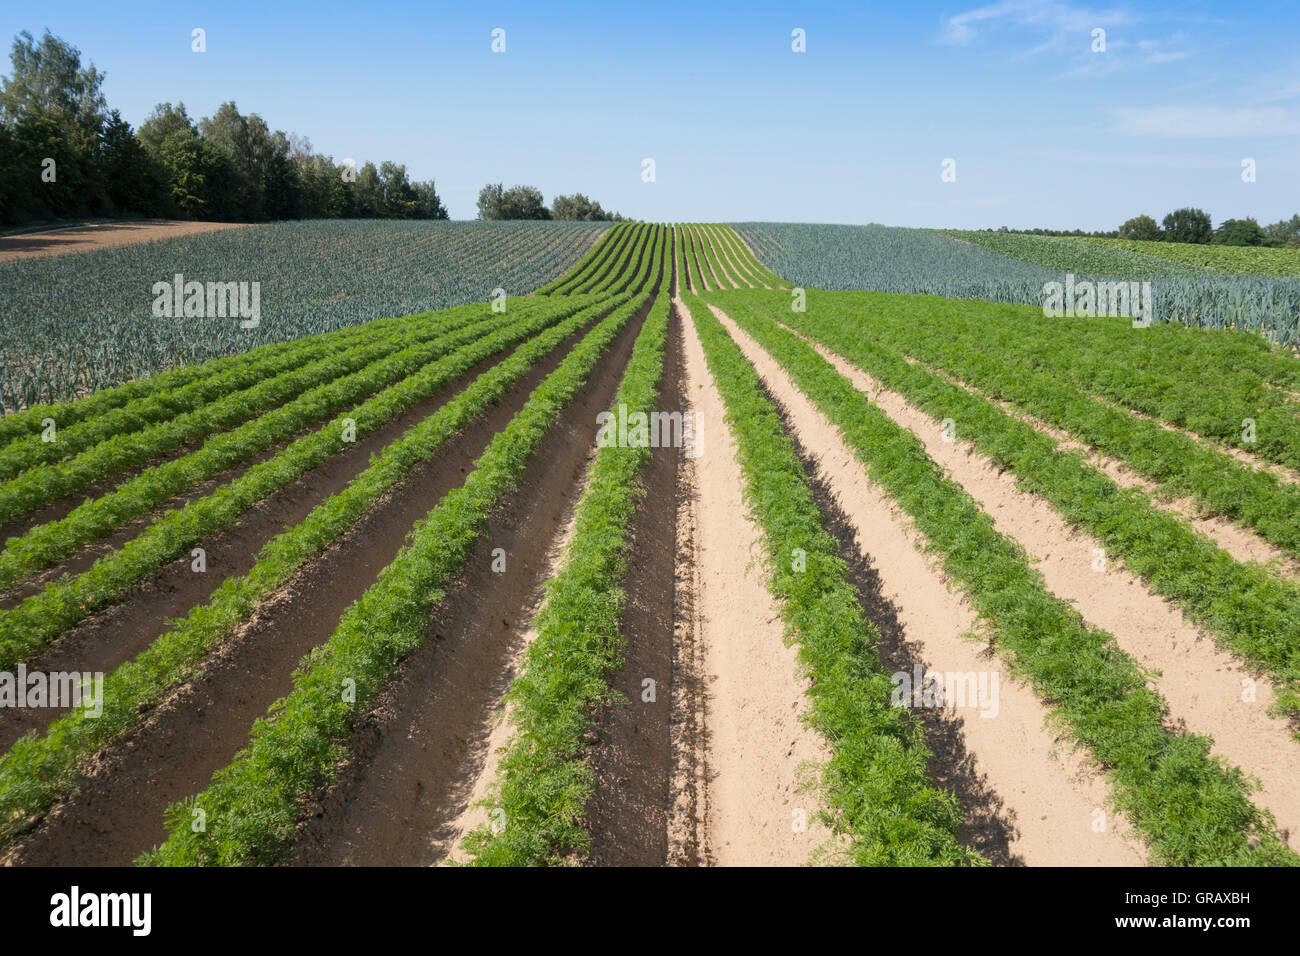 Karotten auf einem Feld Stockfoto